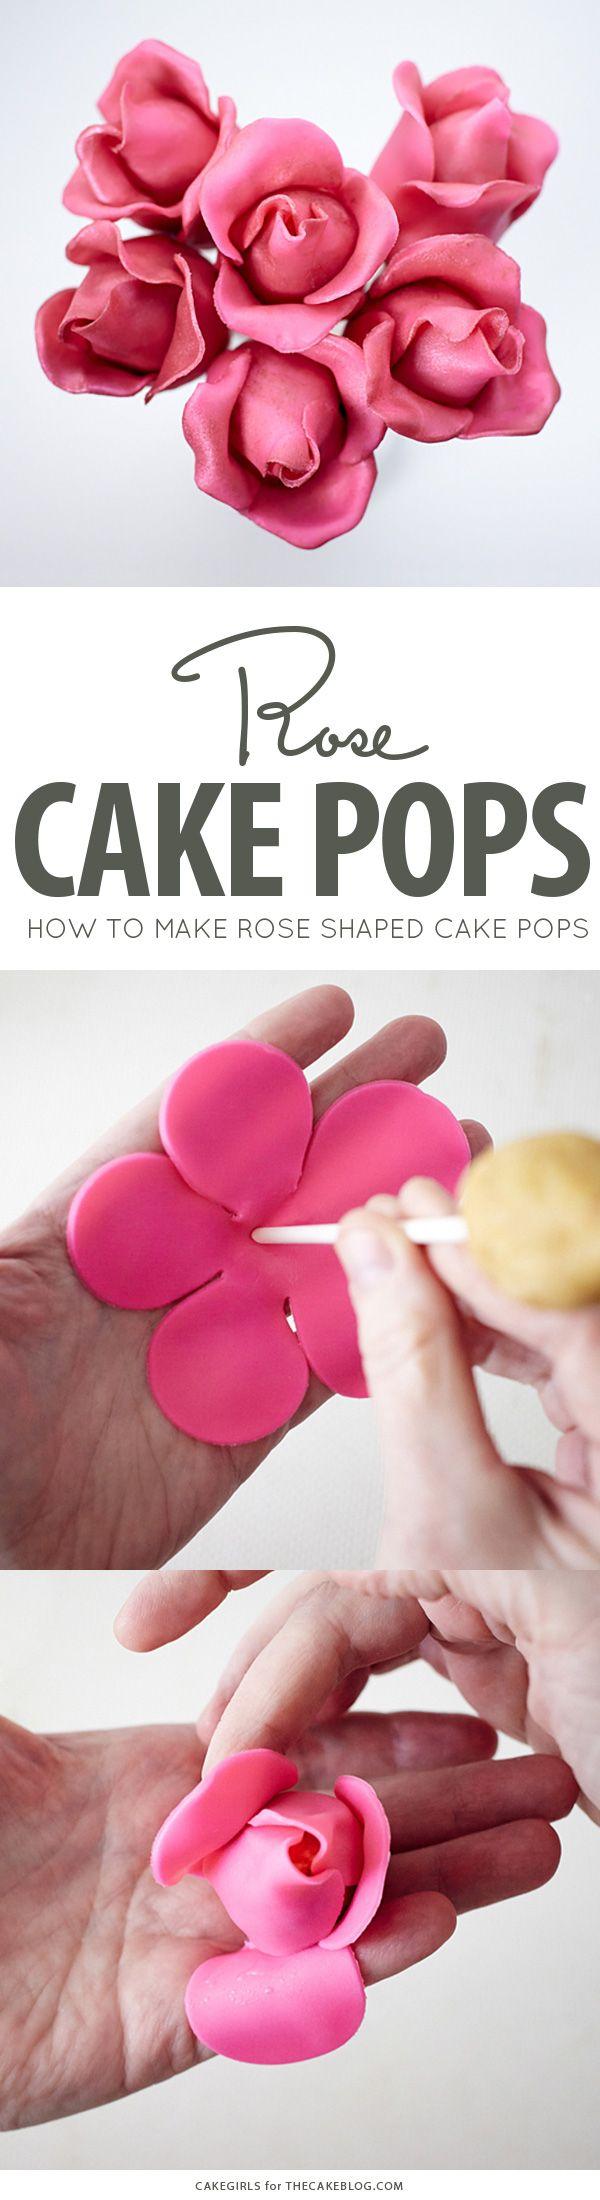 Wedding - DIY Rose Cake Pops